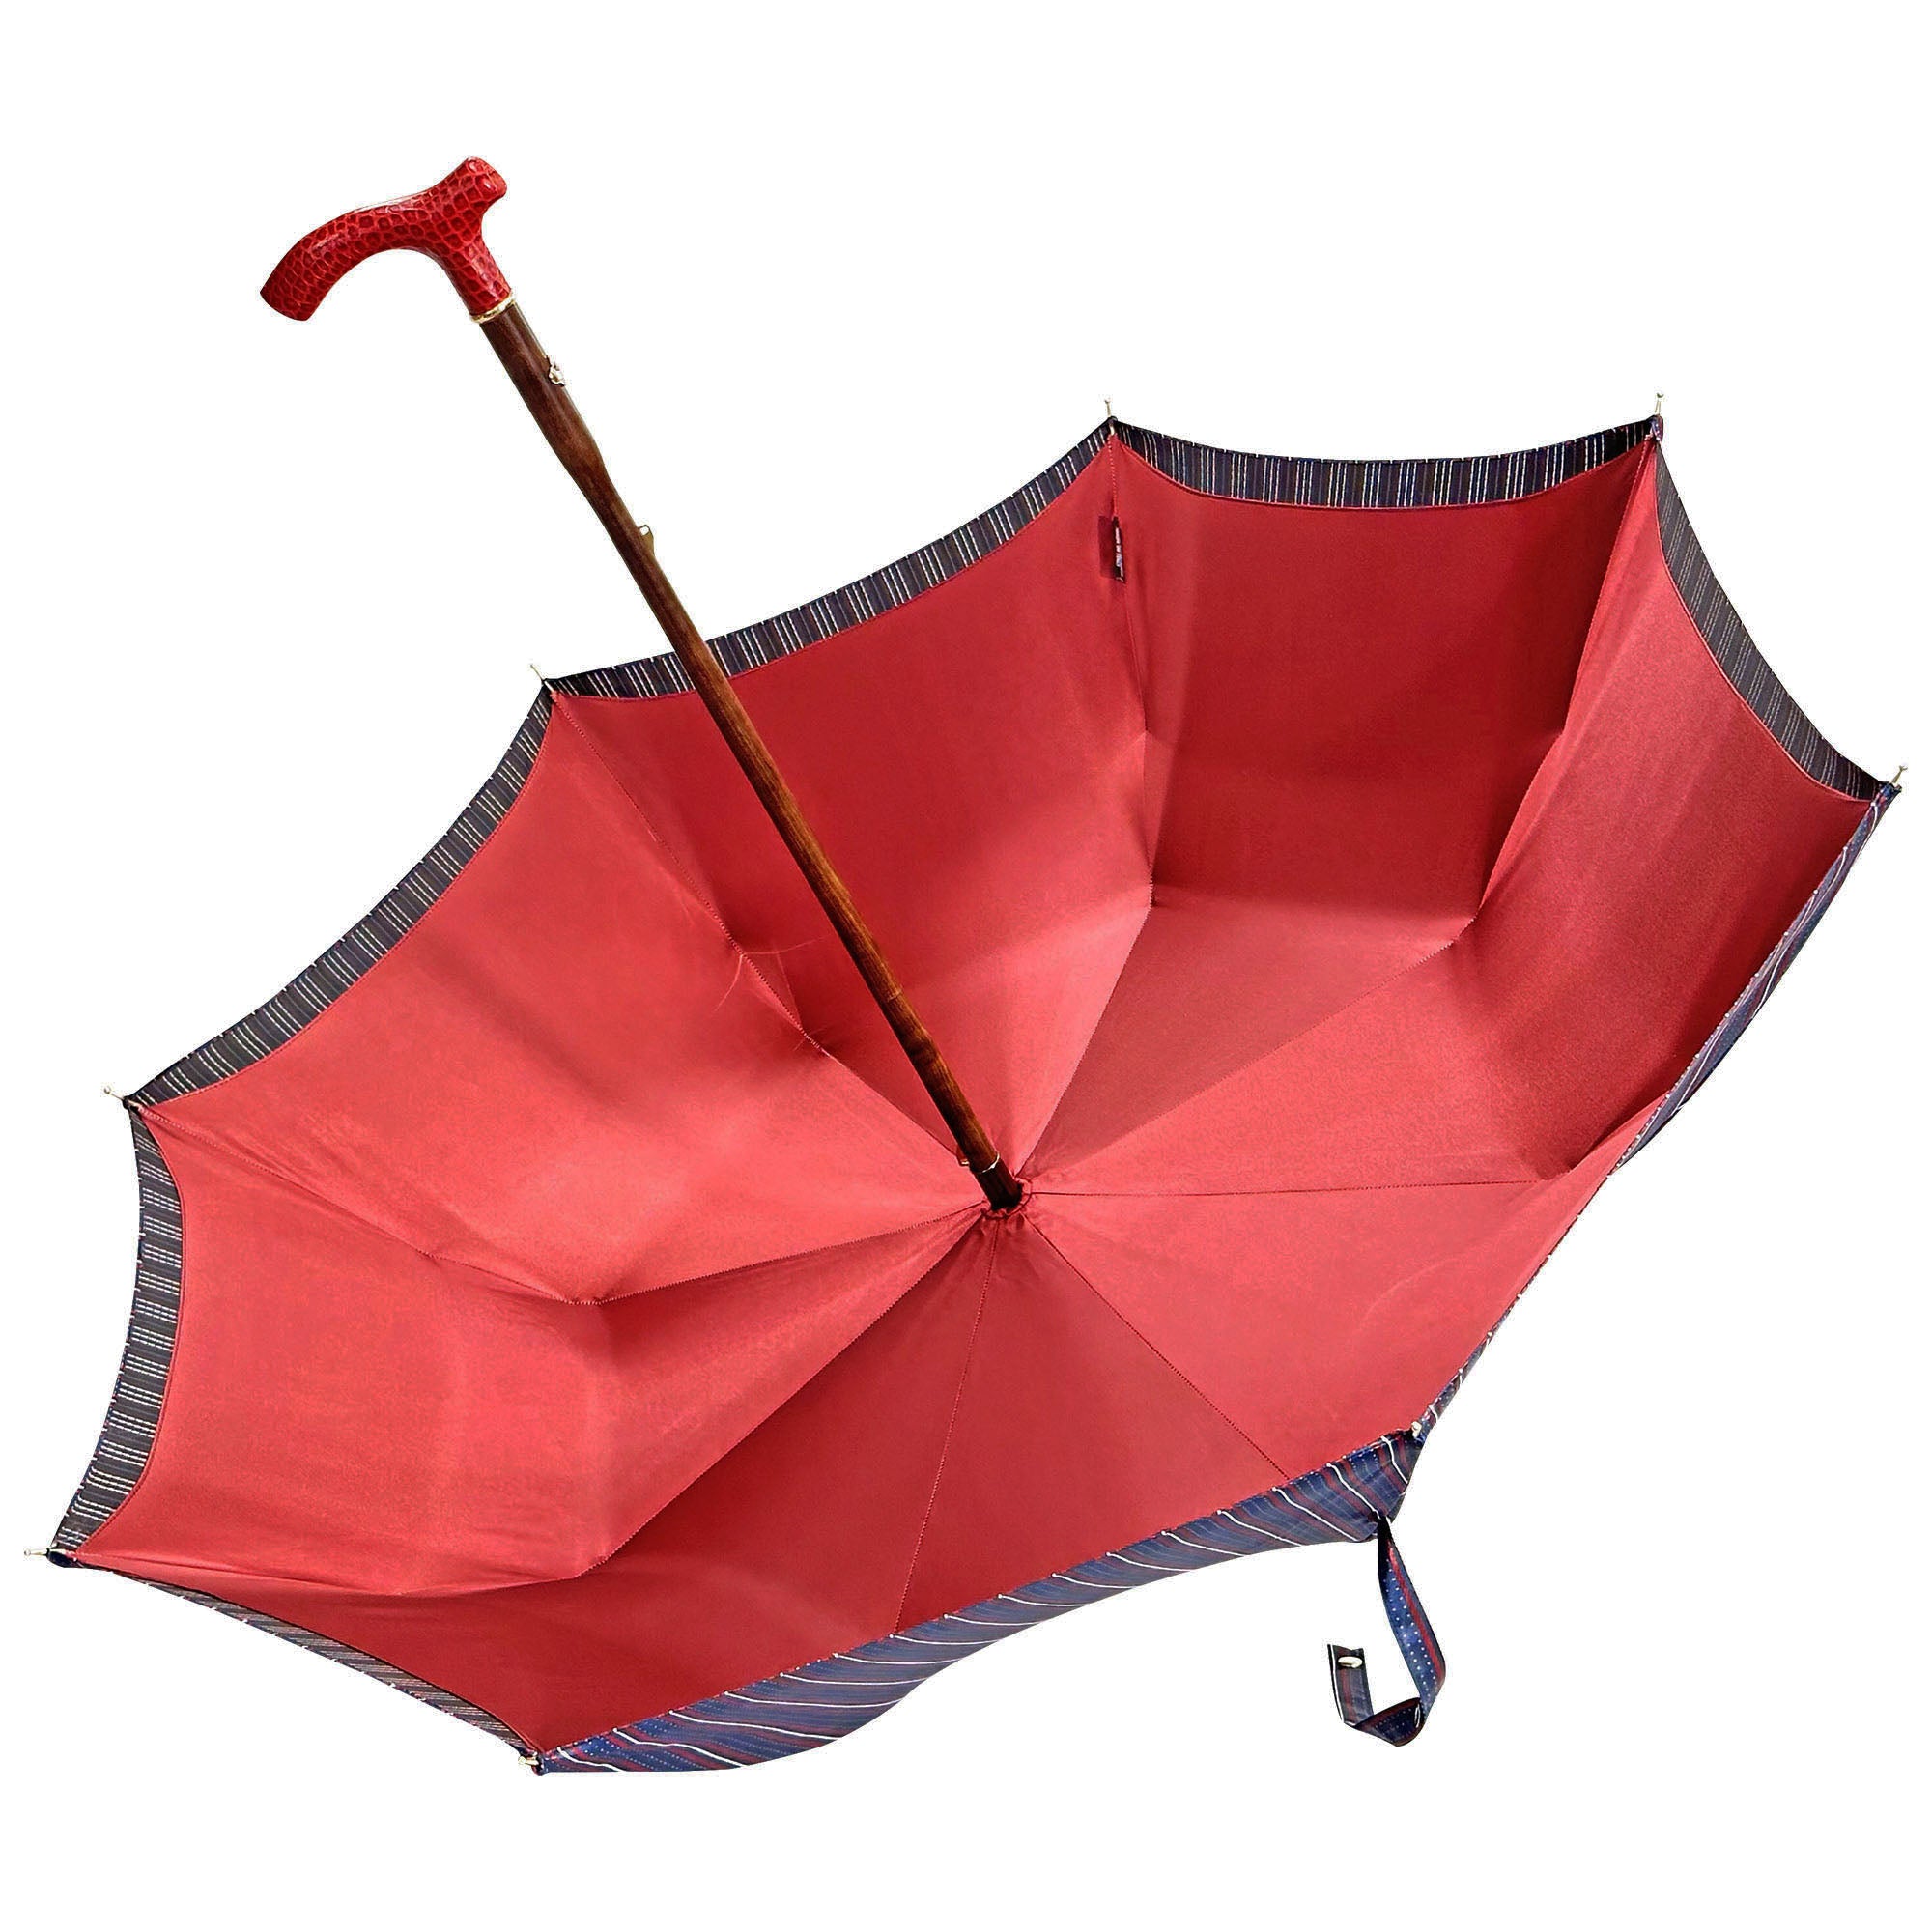 Elegant burgundy umbrella - handmade red leather handle